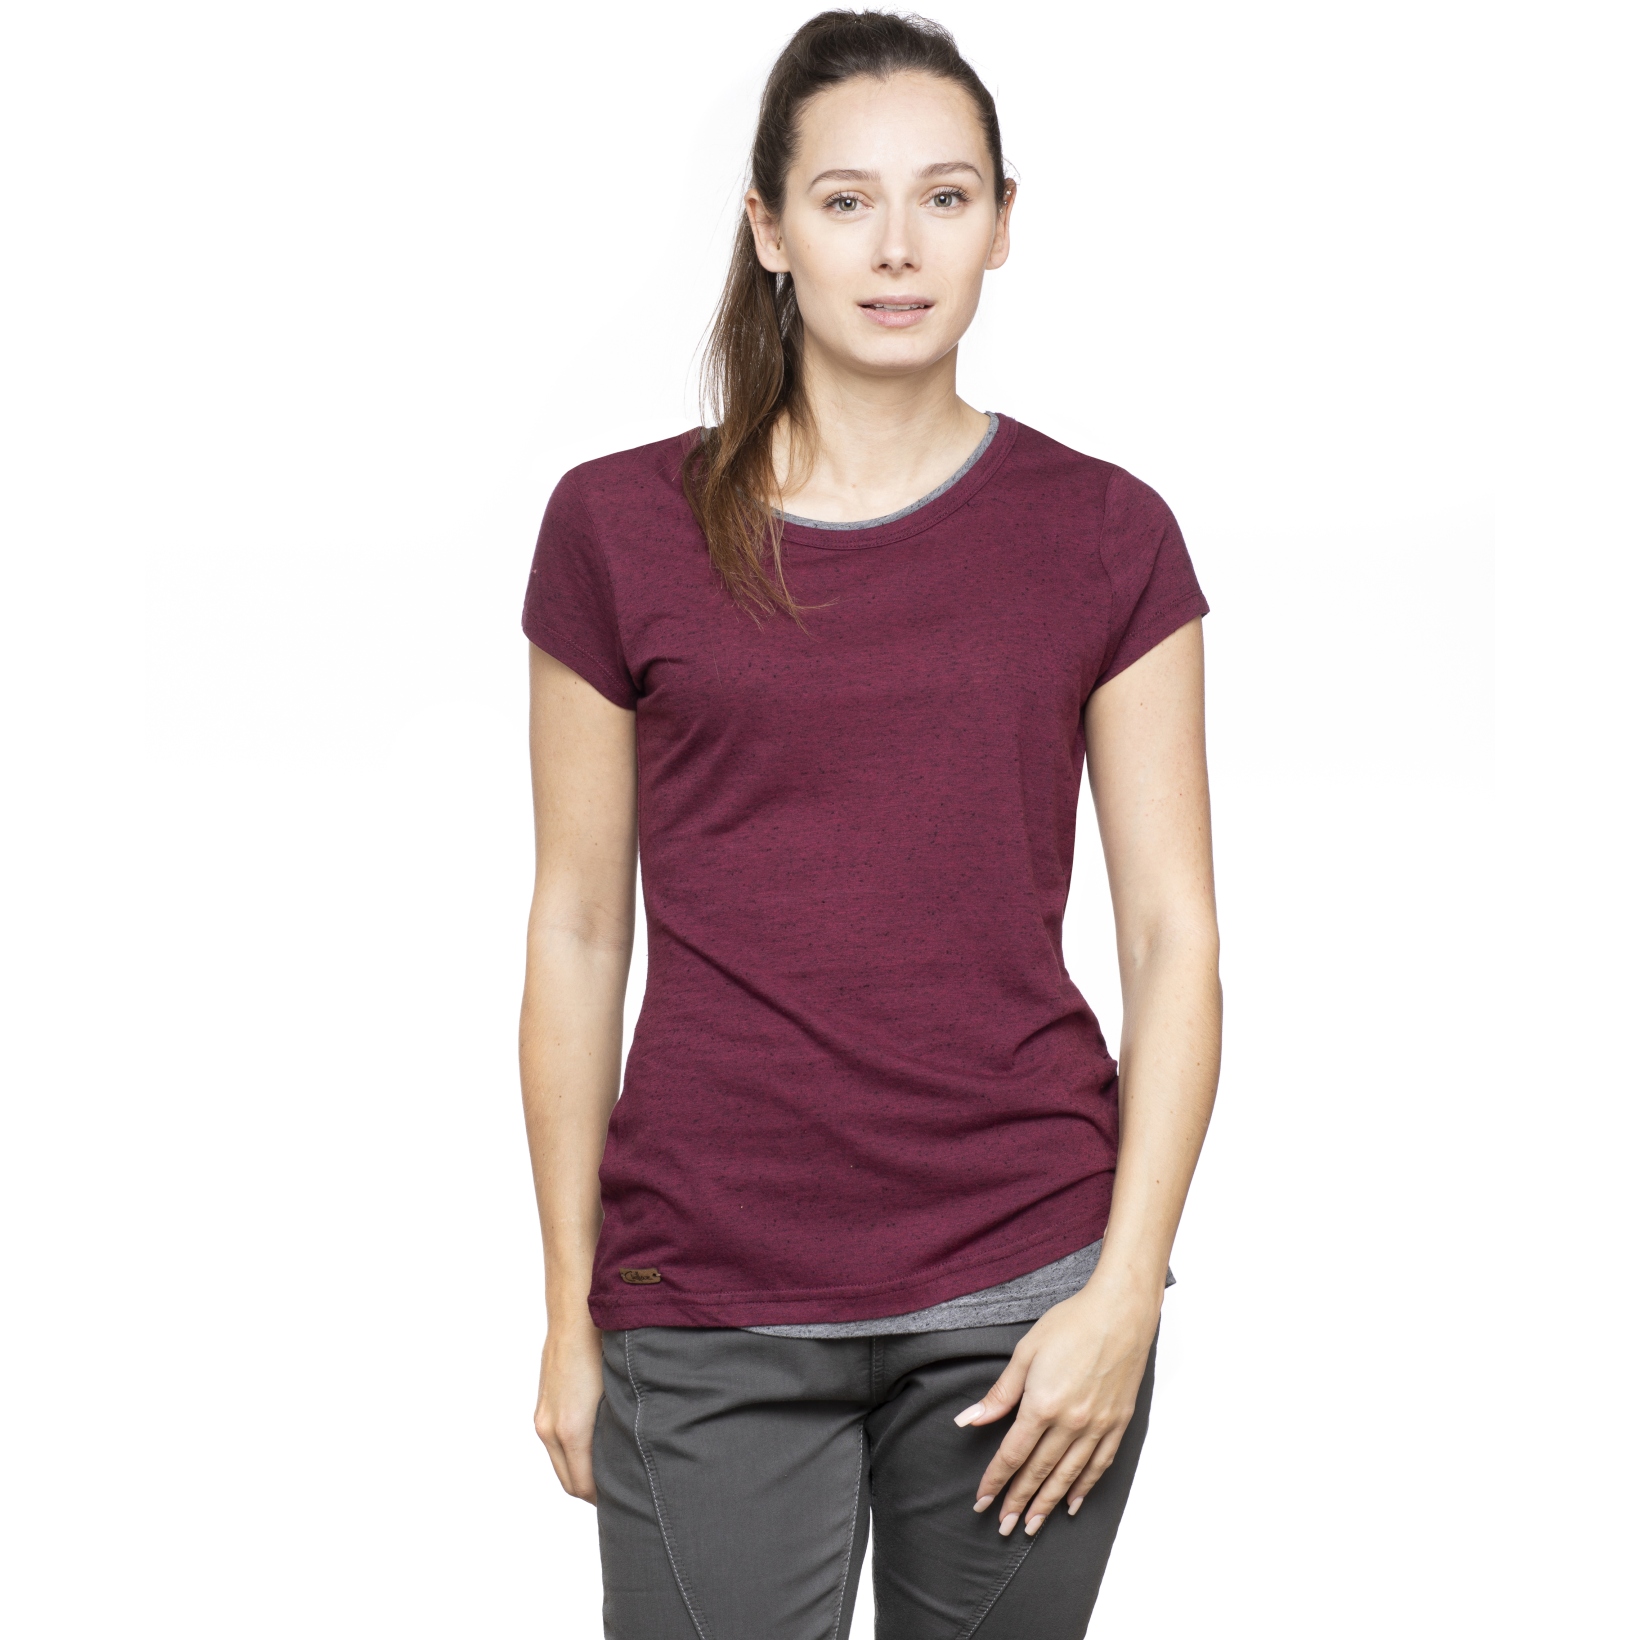 Productfoto van Chillaz Fancy T-Shirt Women - dry rose melange